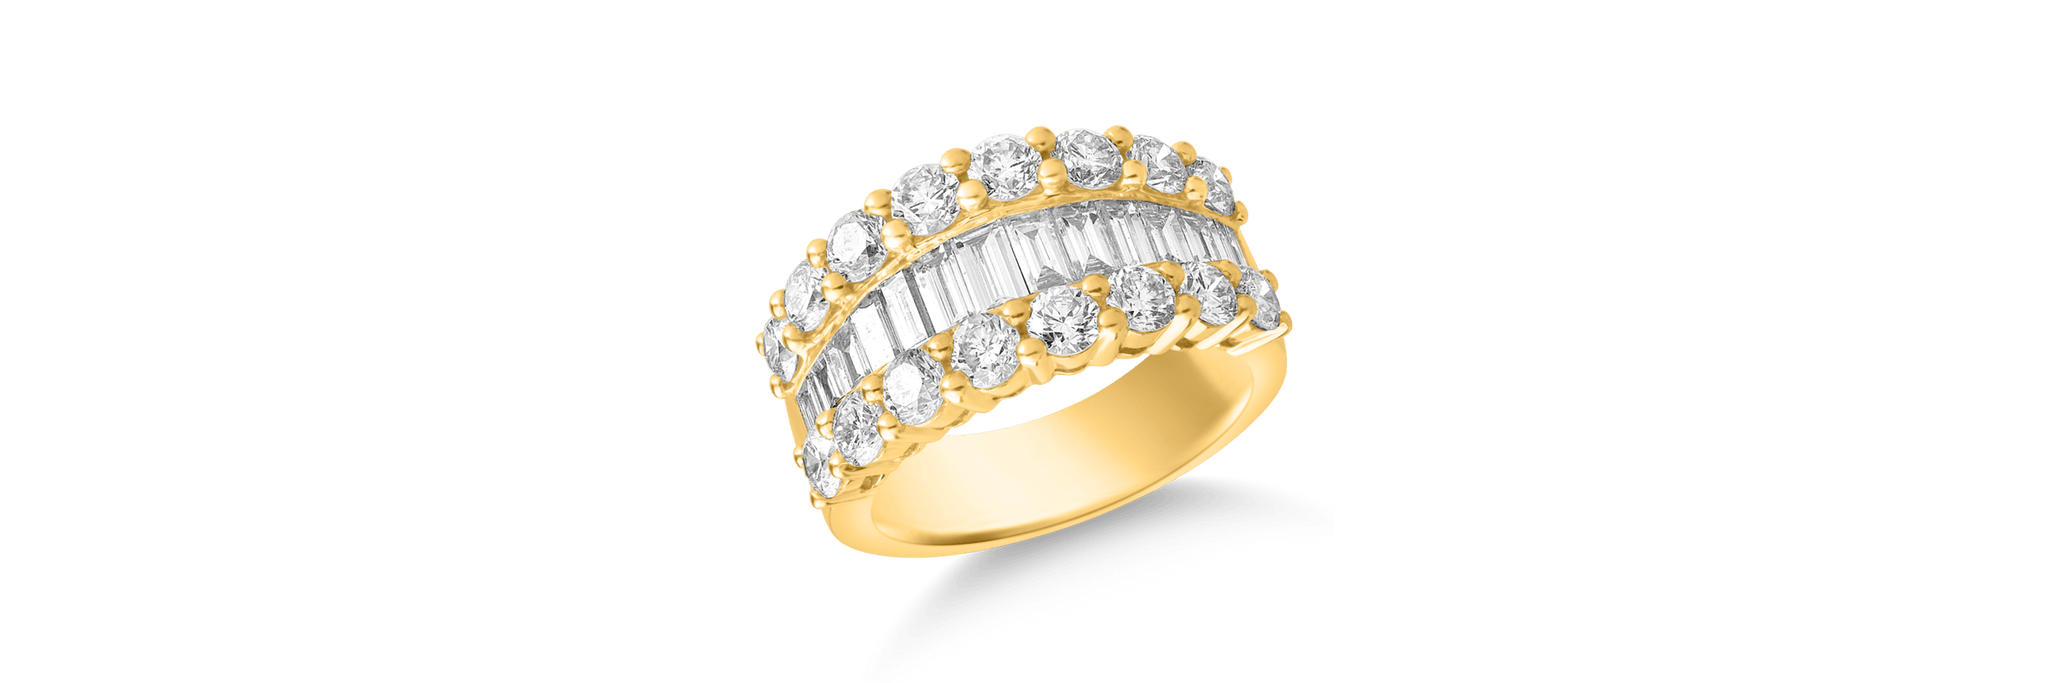 Inel din aur galben de 18K cu diamante de 3.18ct